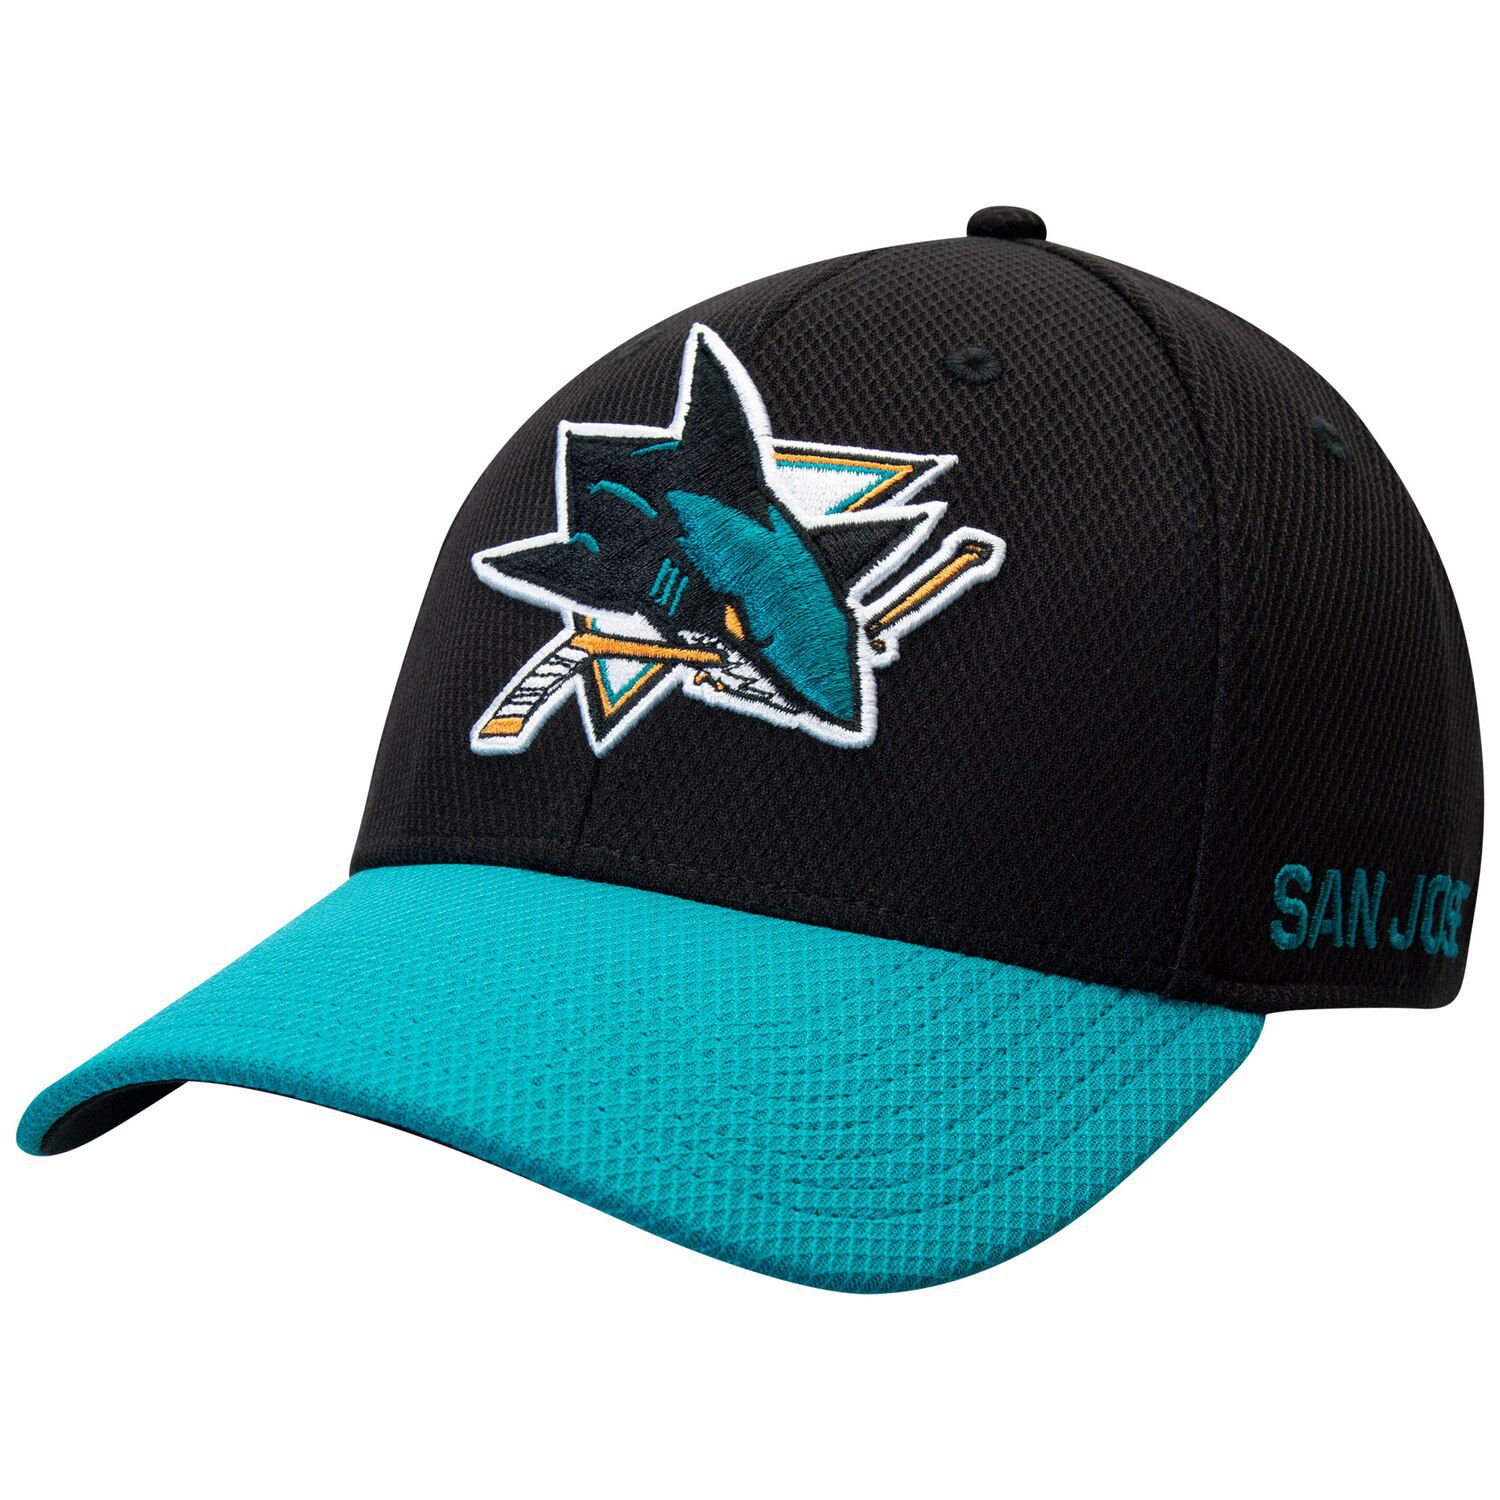 black san jose sharks hat